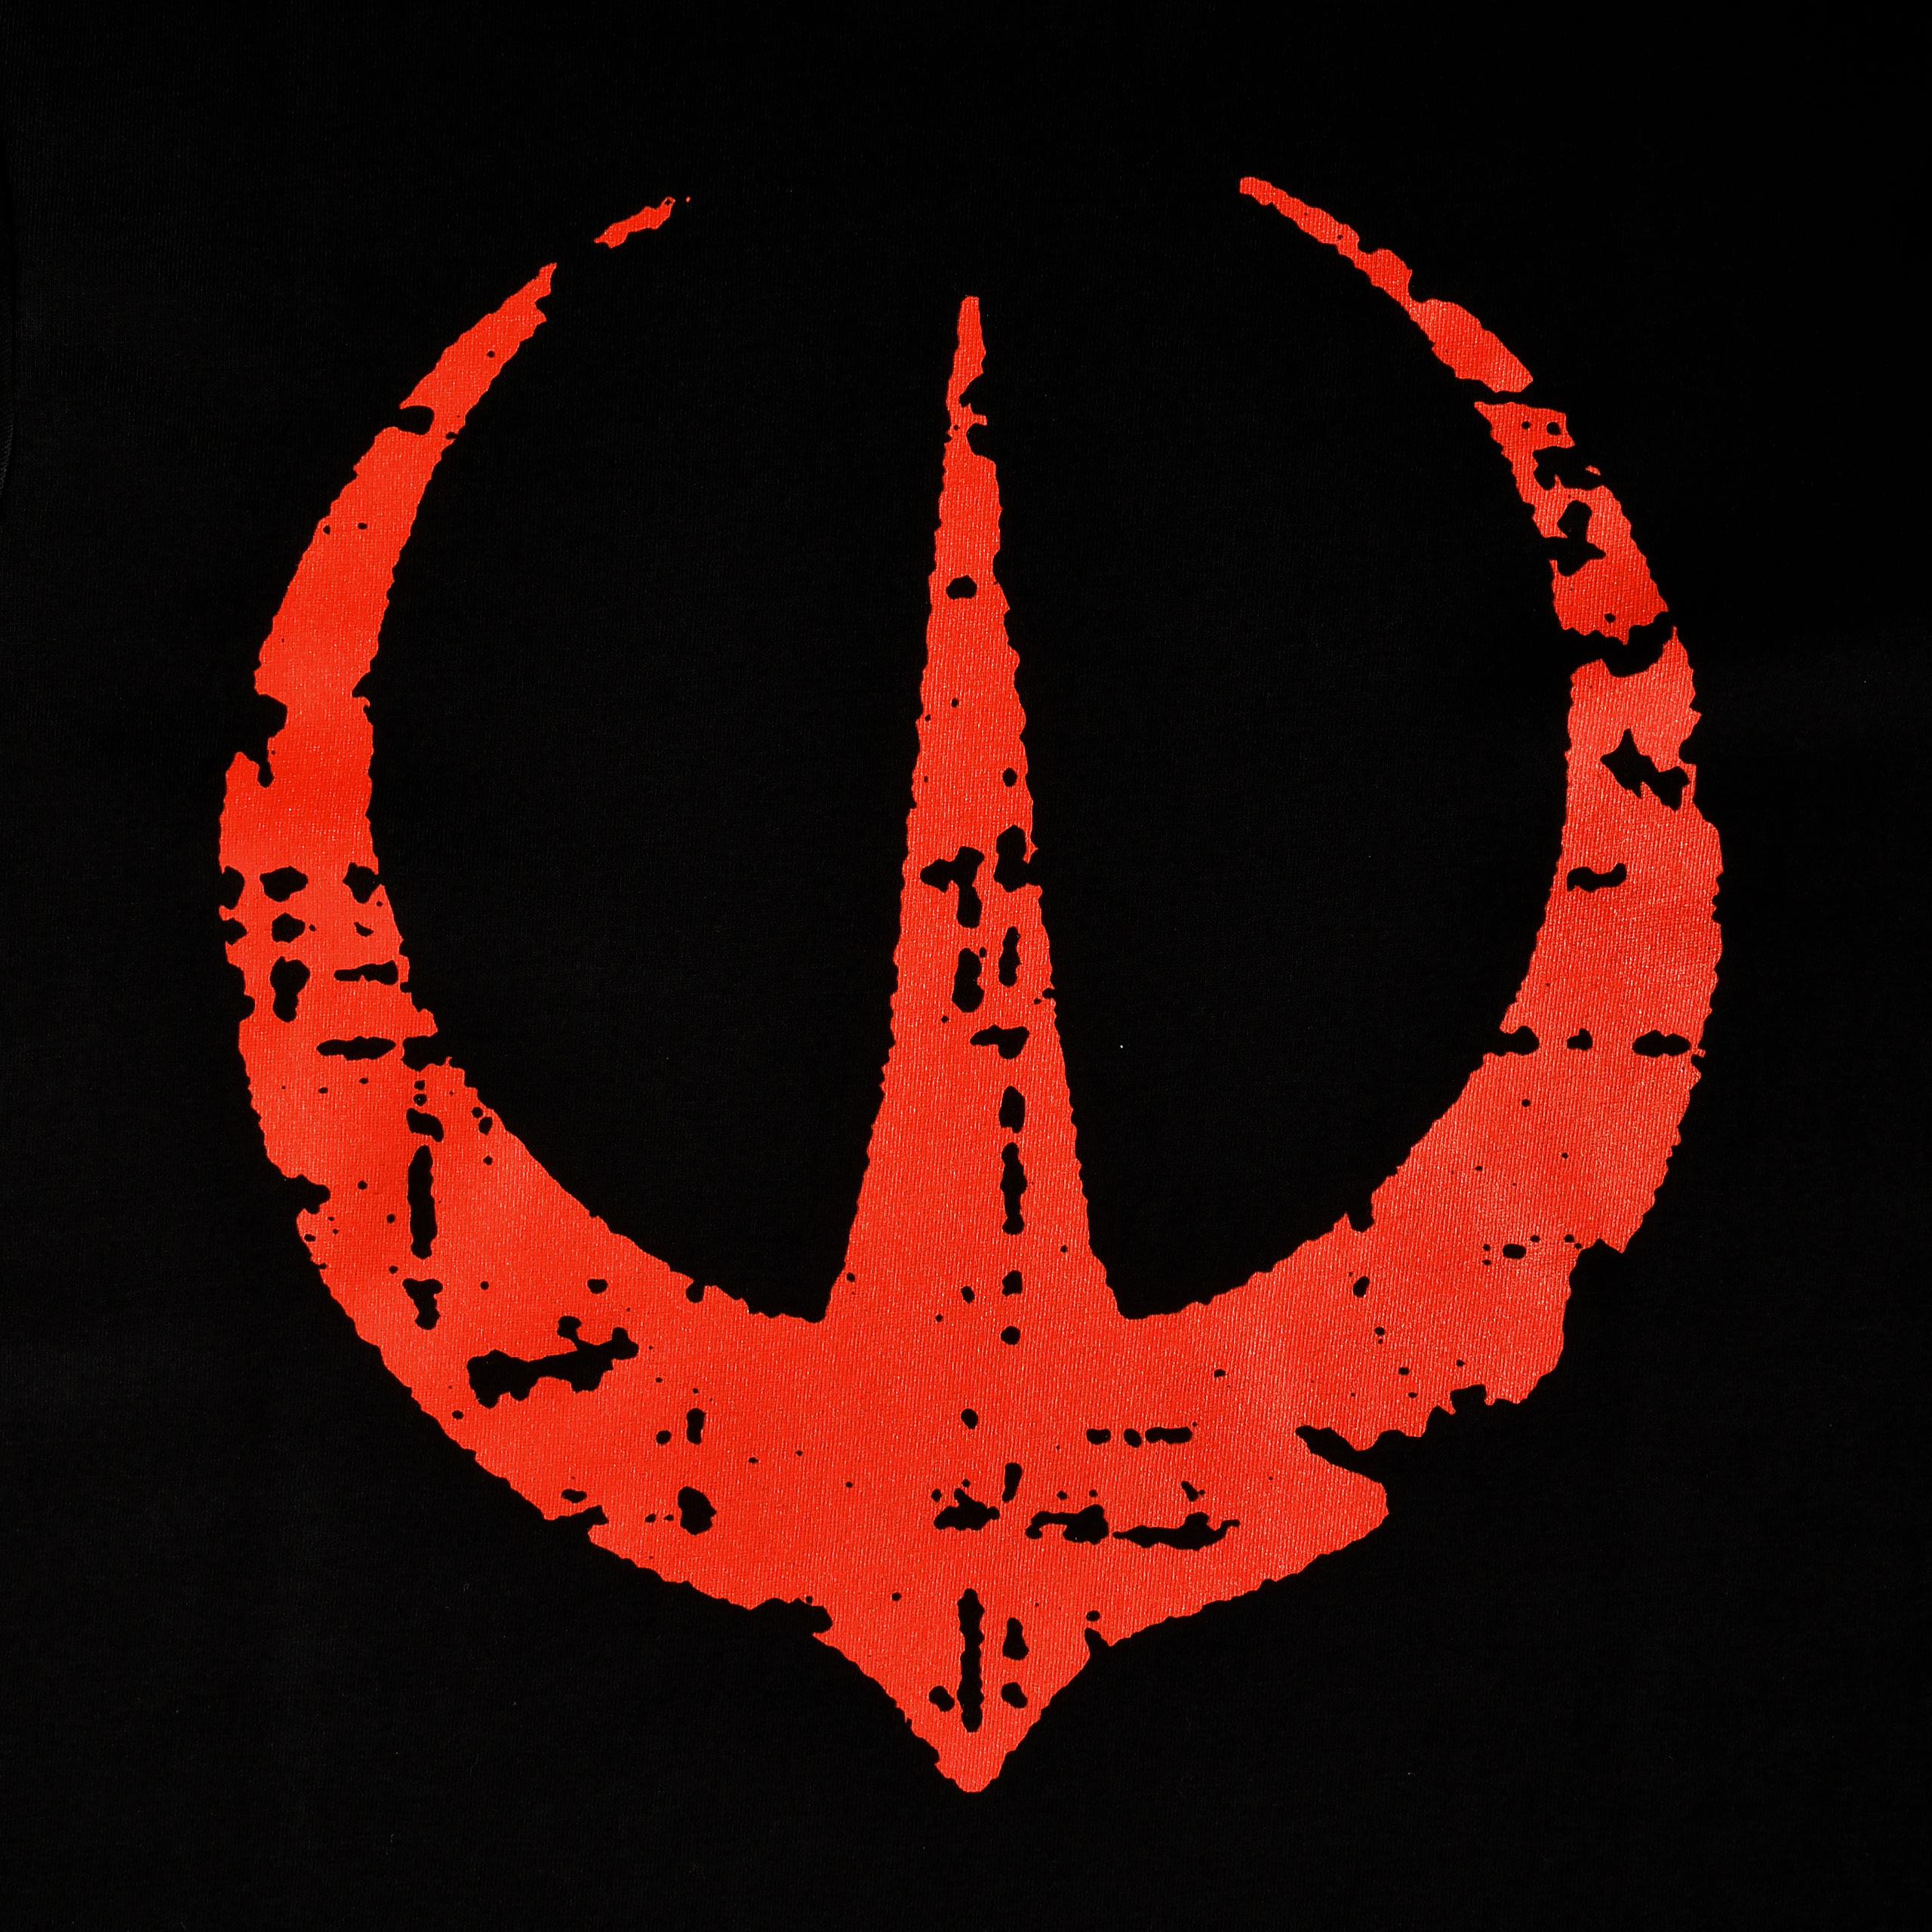 Rebellie Logo T-shirt zwart - Star Wars Andor